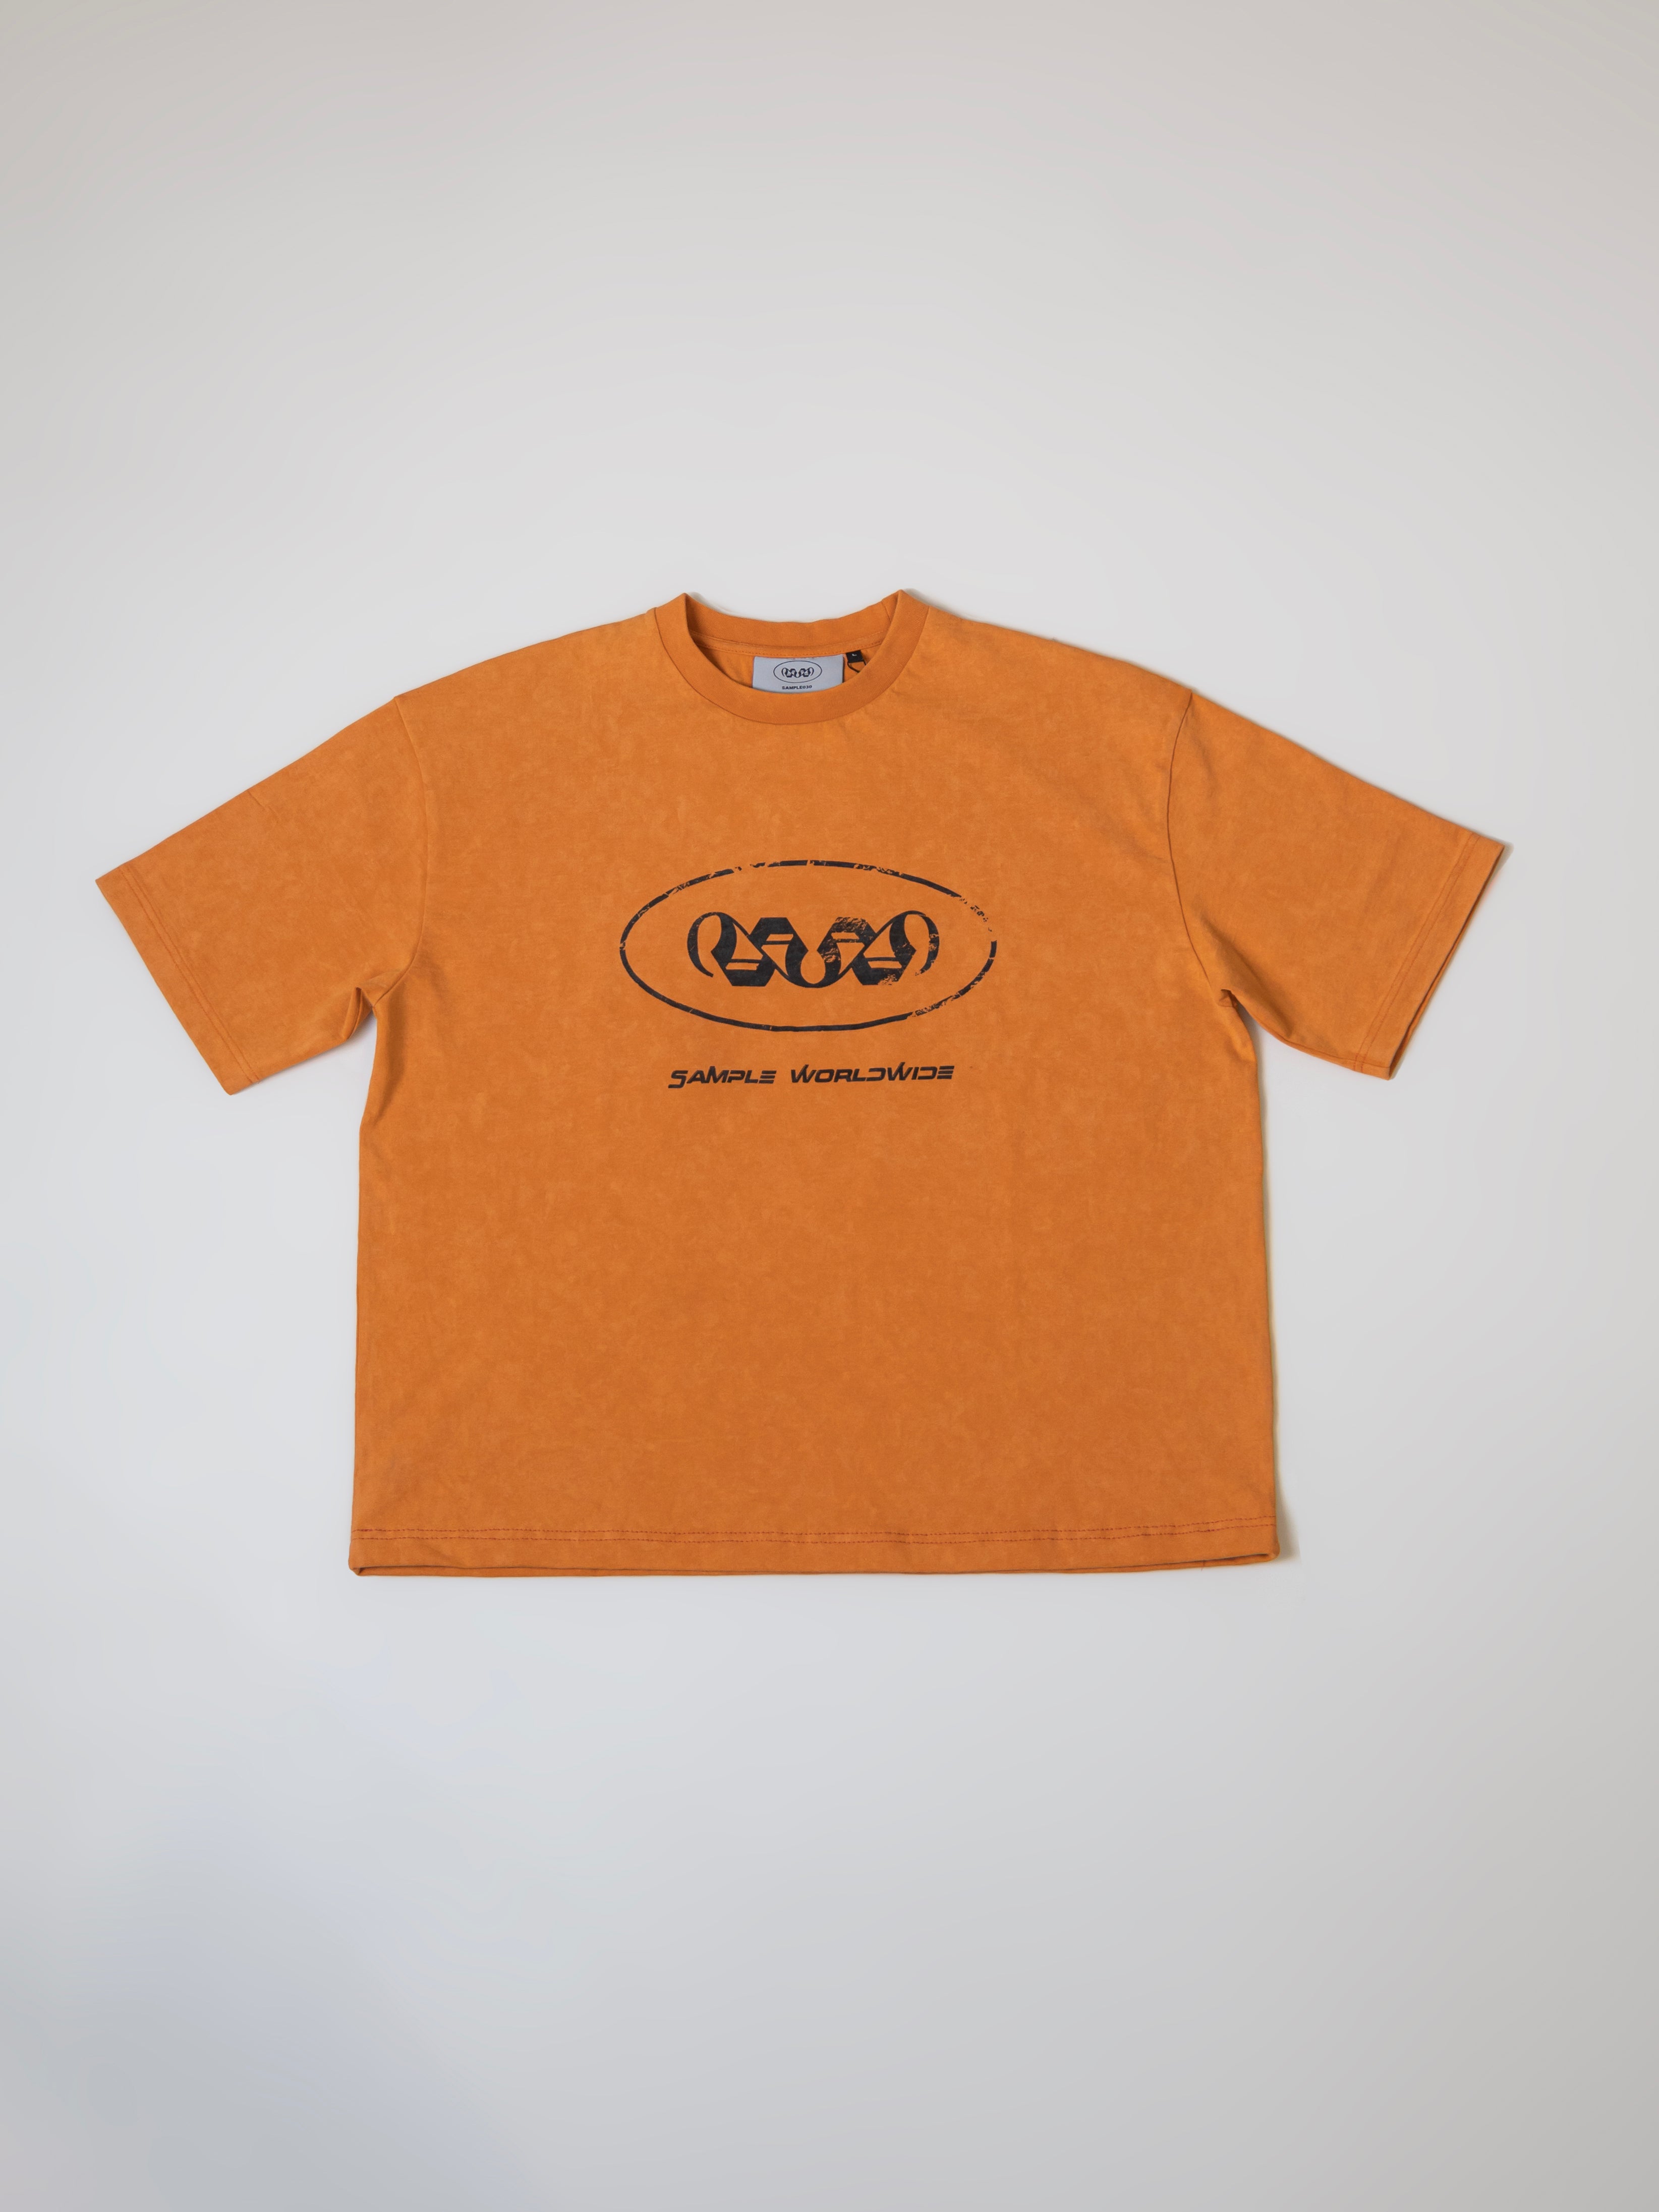 Sample Worldwide T-Shirt